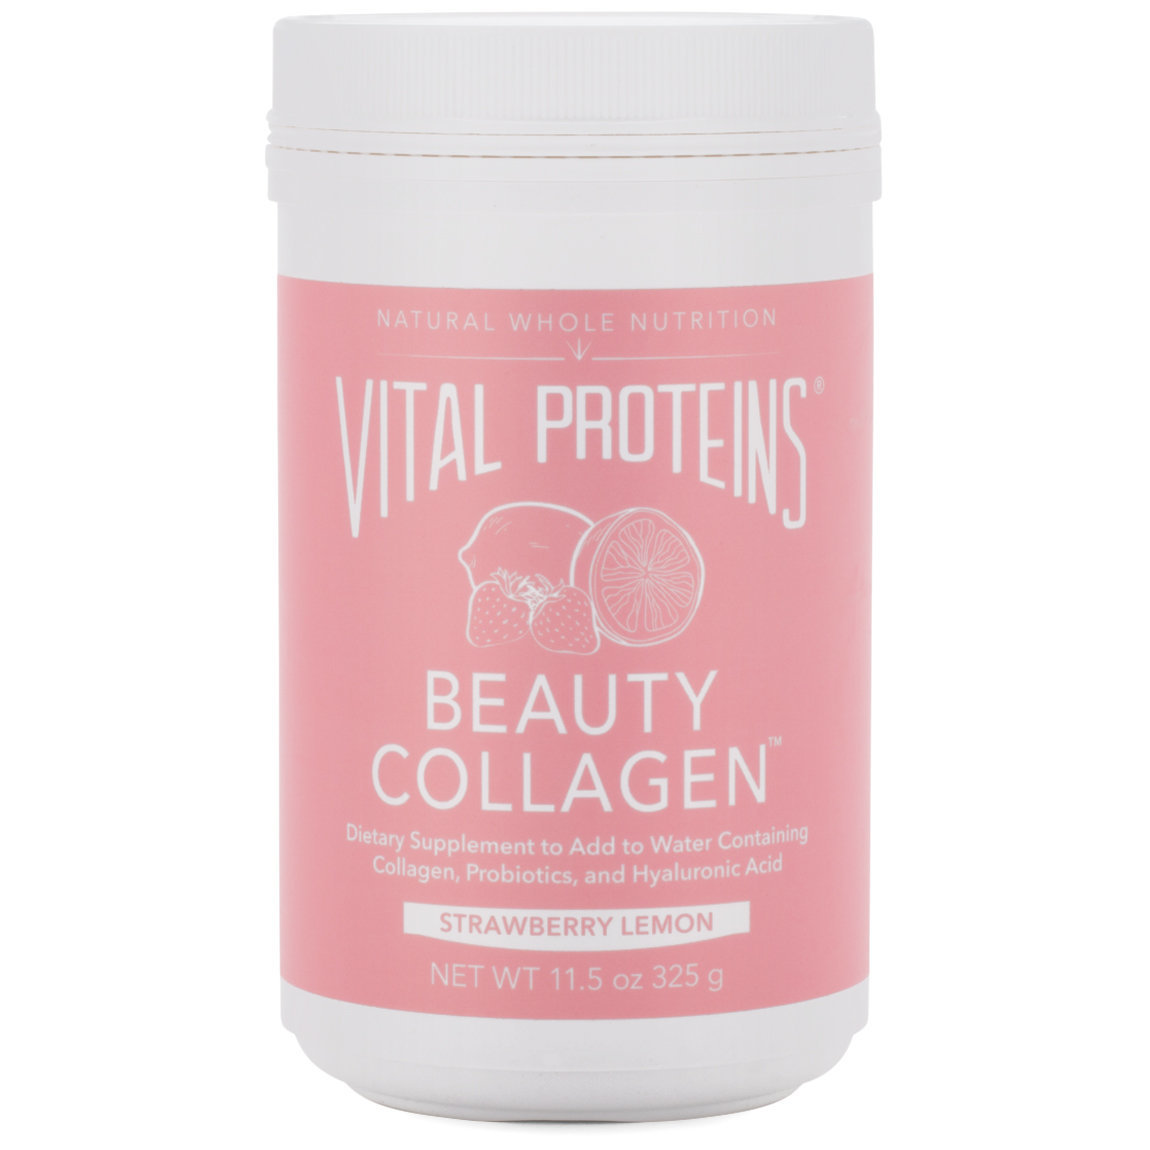 Vital Proteins Beauty Collagen - Strawberry Lemon 11.5 oz | Beautylish